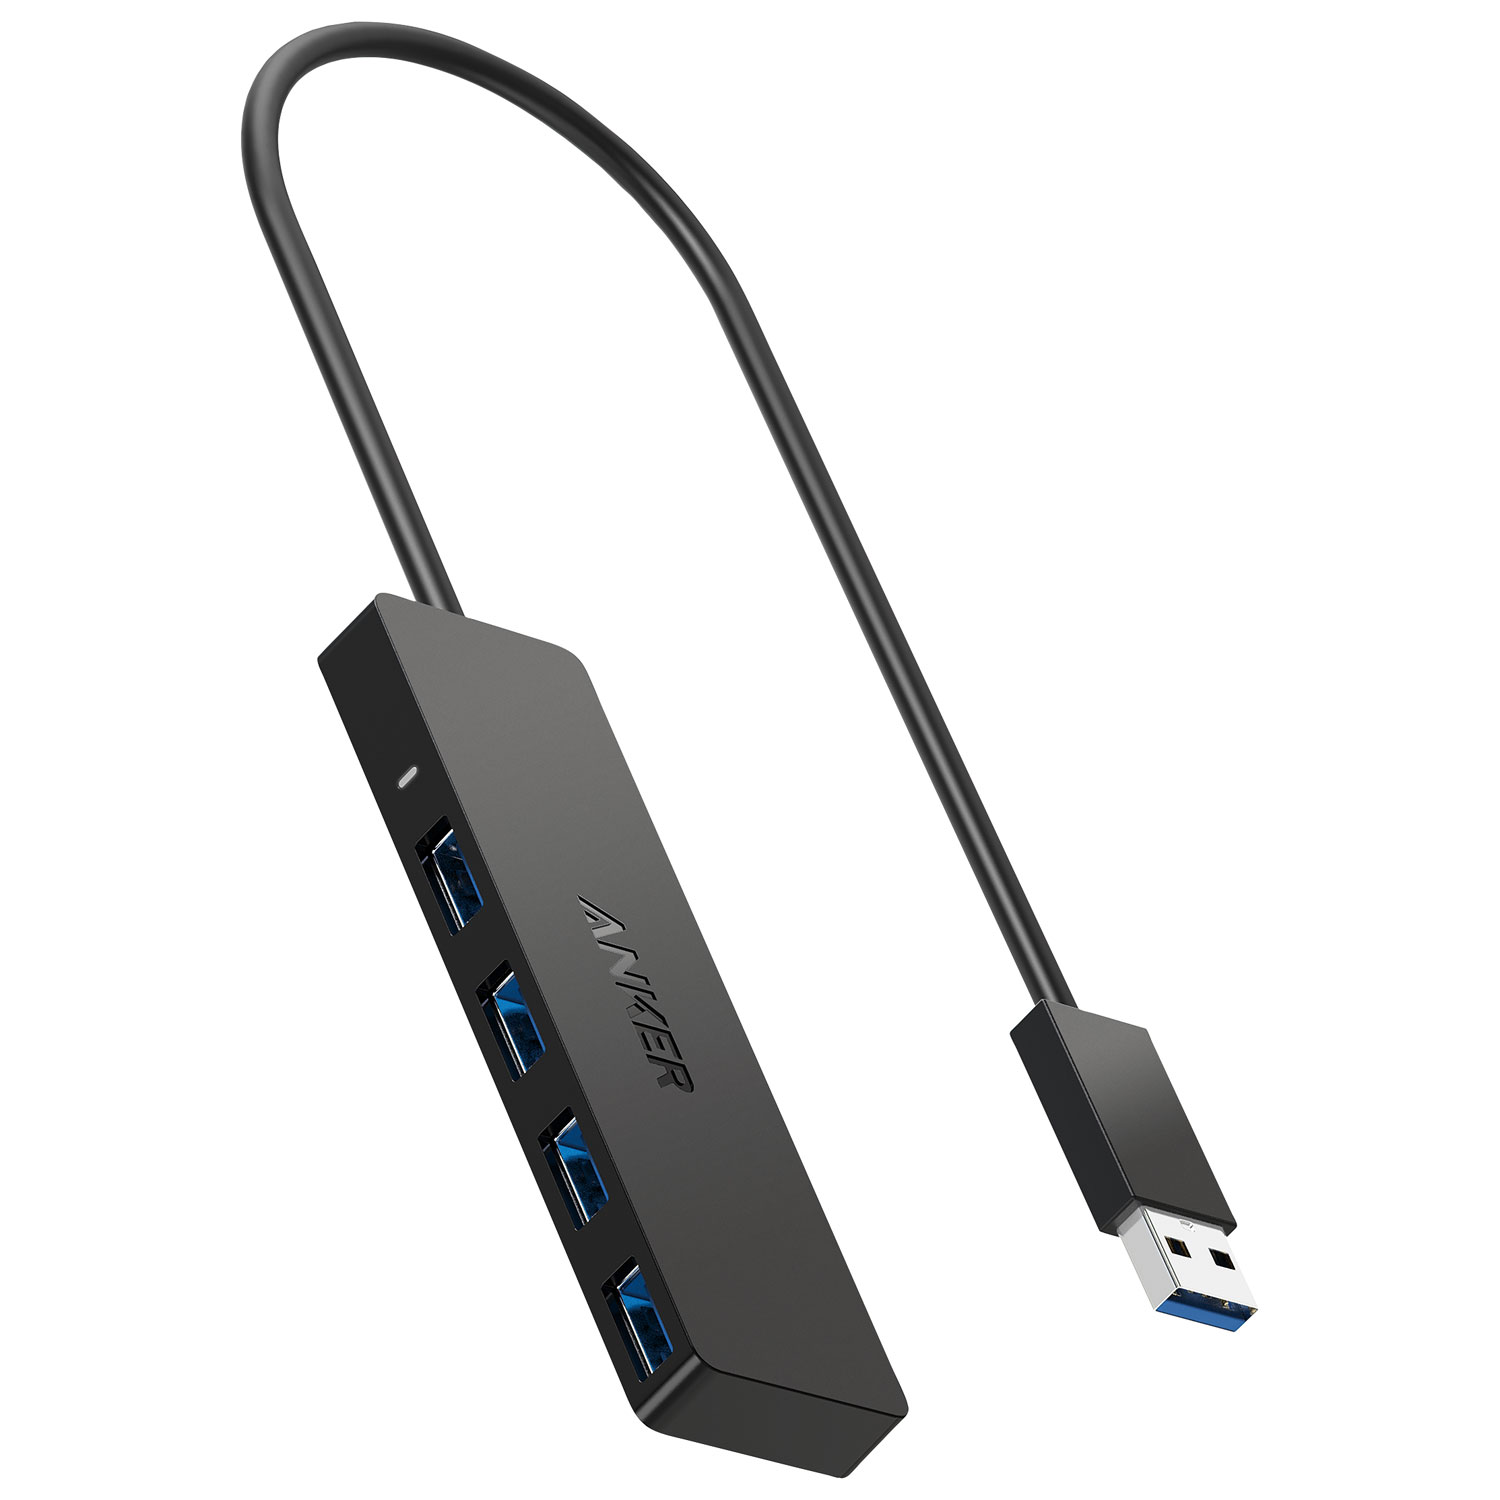 Anker Ultra Slim 4-Port USB 3.0 Hub (A7516H14-5)